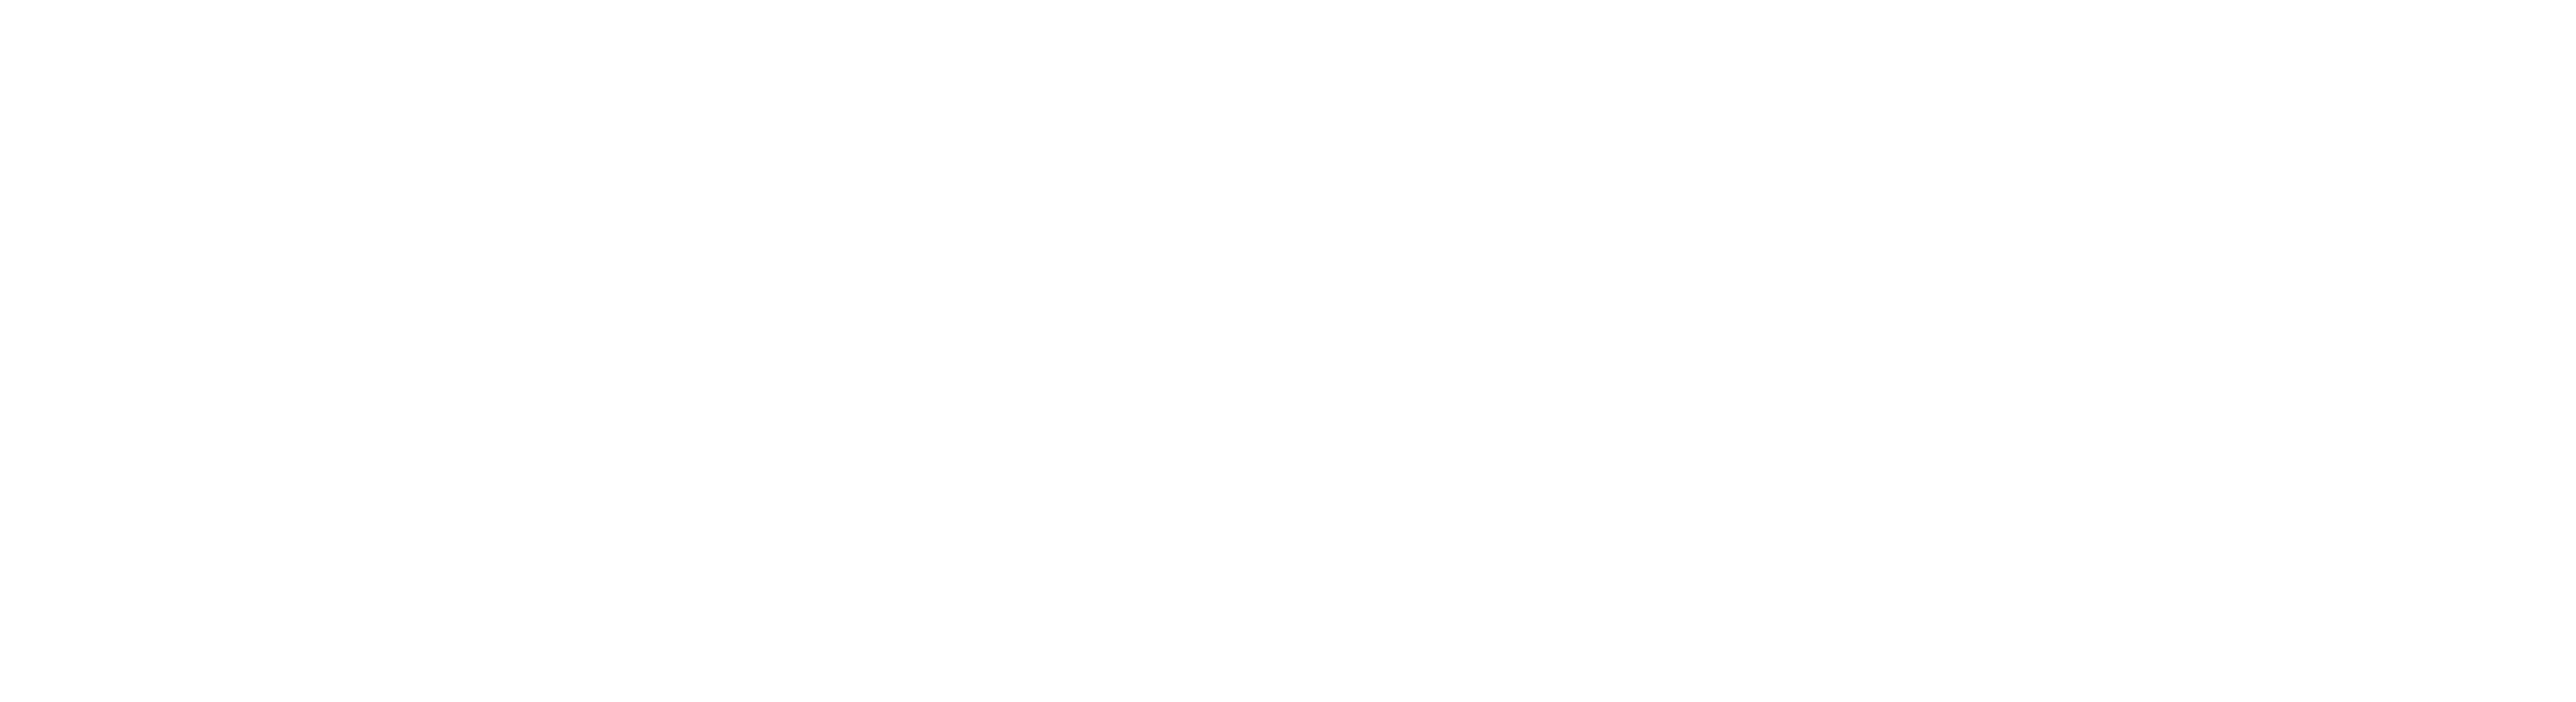 Car Service Wale Footer logo